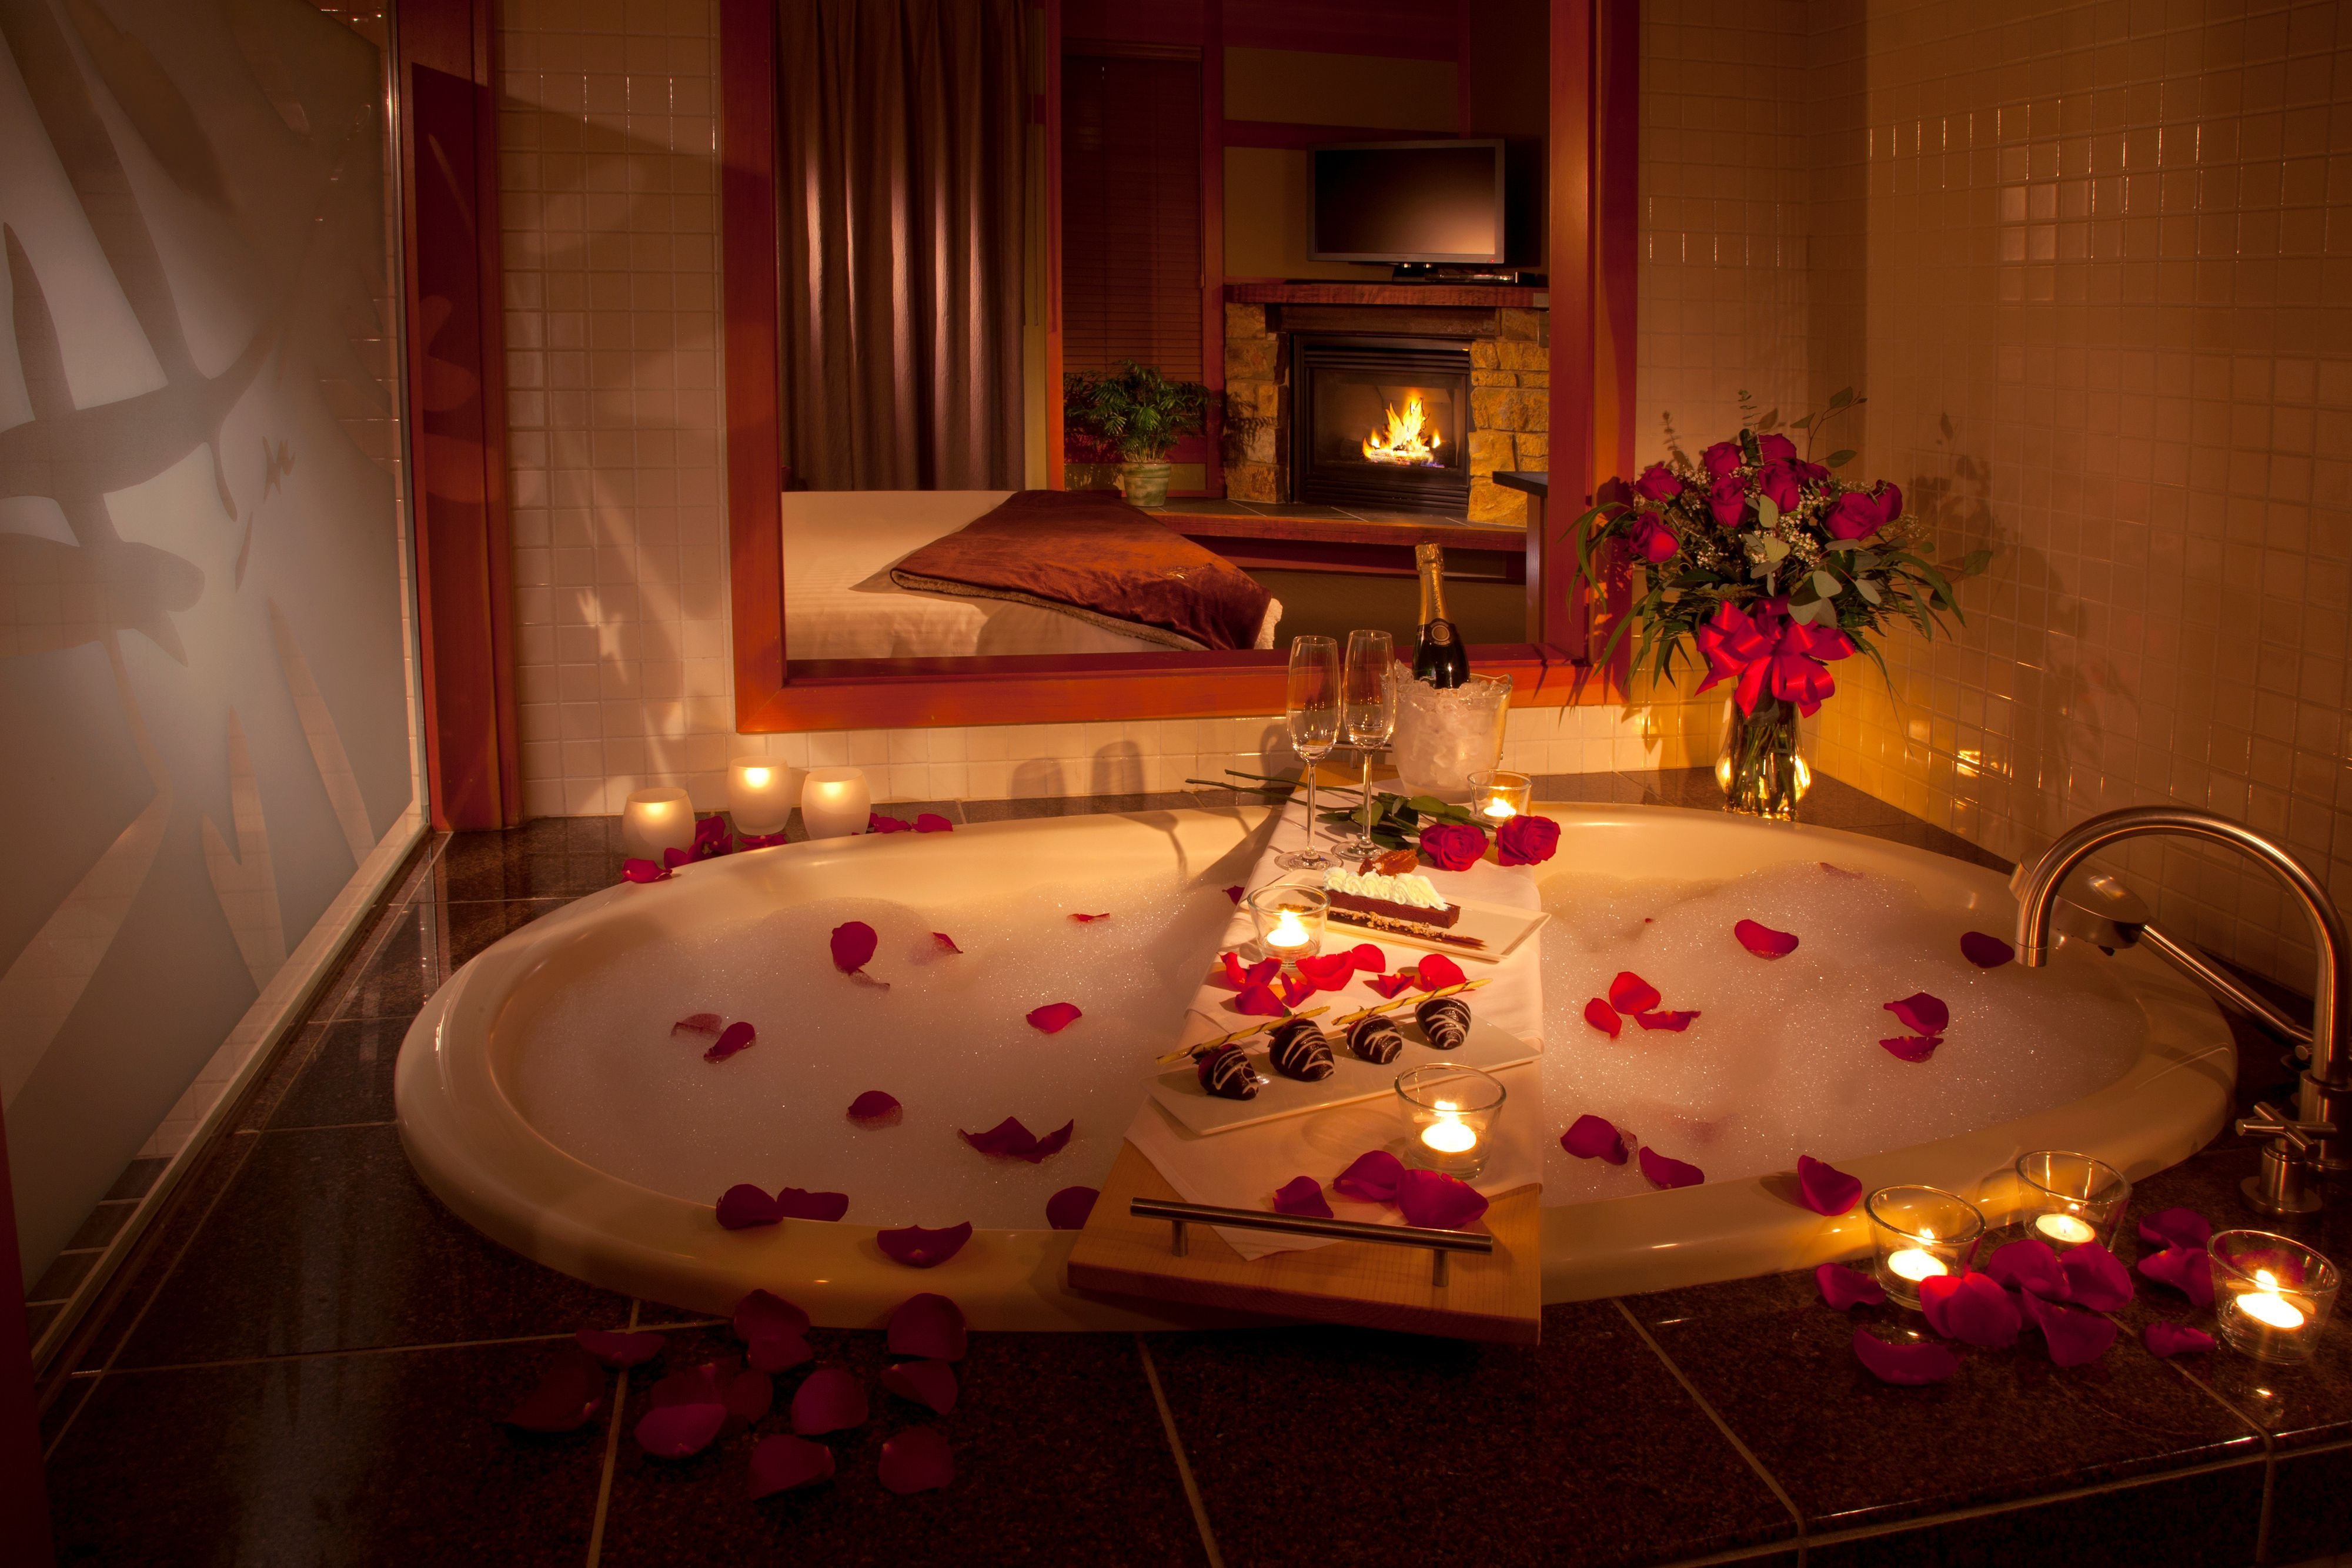 Романтика нормализовать. Романтическая комната. Комната для романтического вечера. Ванна с лепестками роз и свечами. Романтический ужин в комнате.